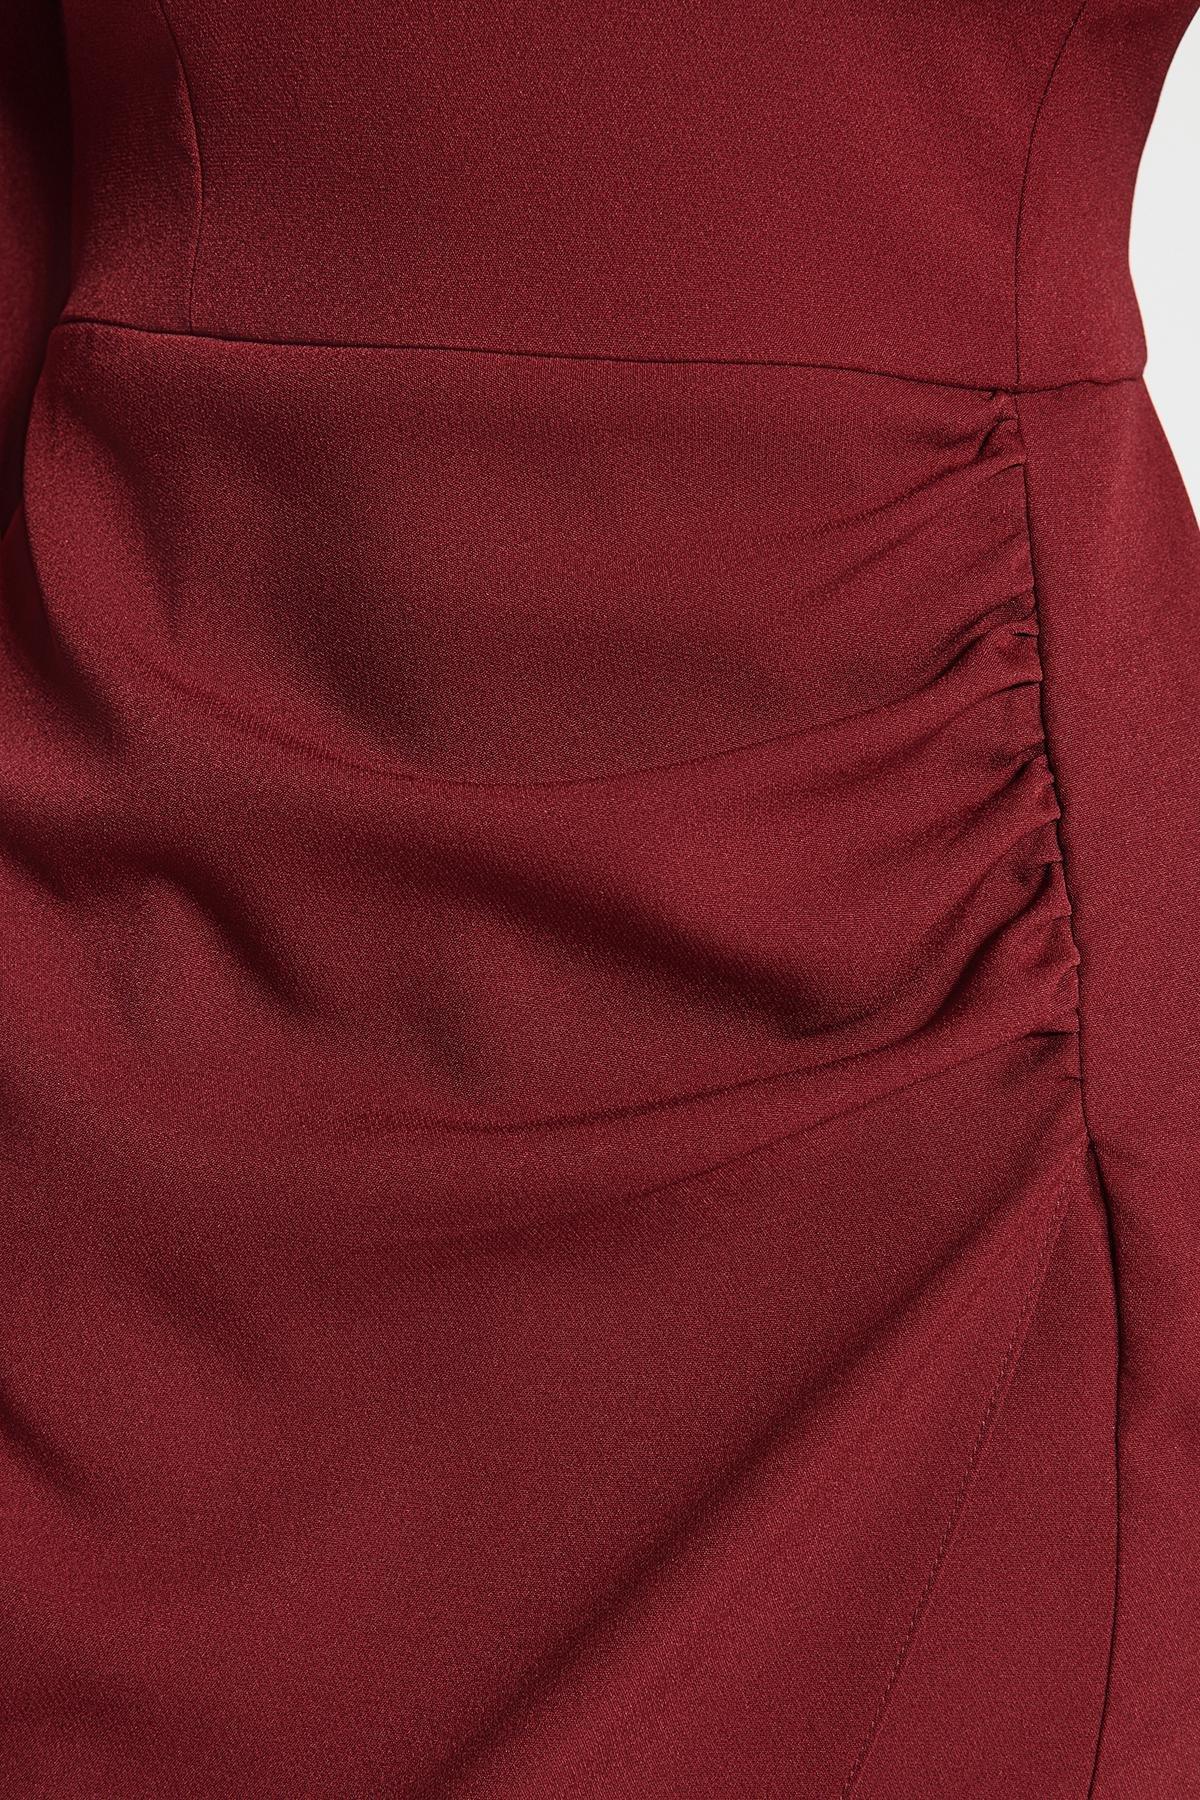 Trendyol - Burgundy Pleated Sleeve Knitted Dress